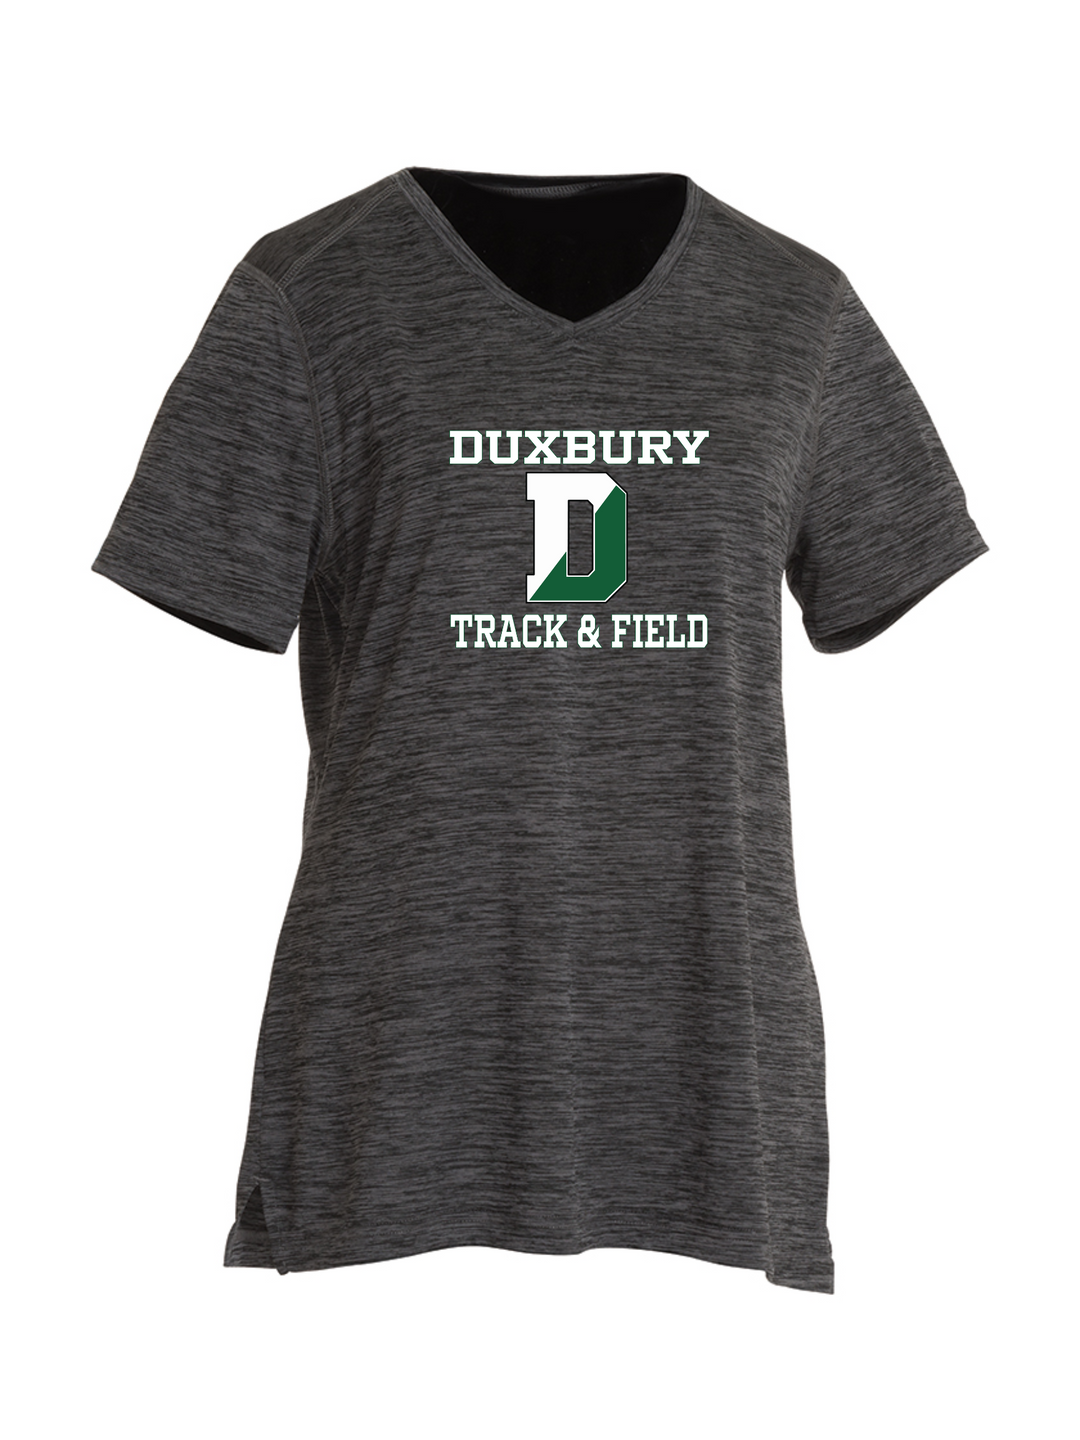 Duxbury Track and Field - Women's Short Sleeve T-Shirt (2764)